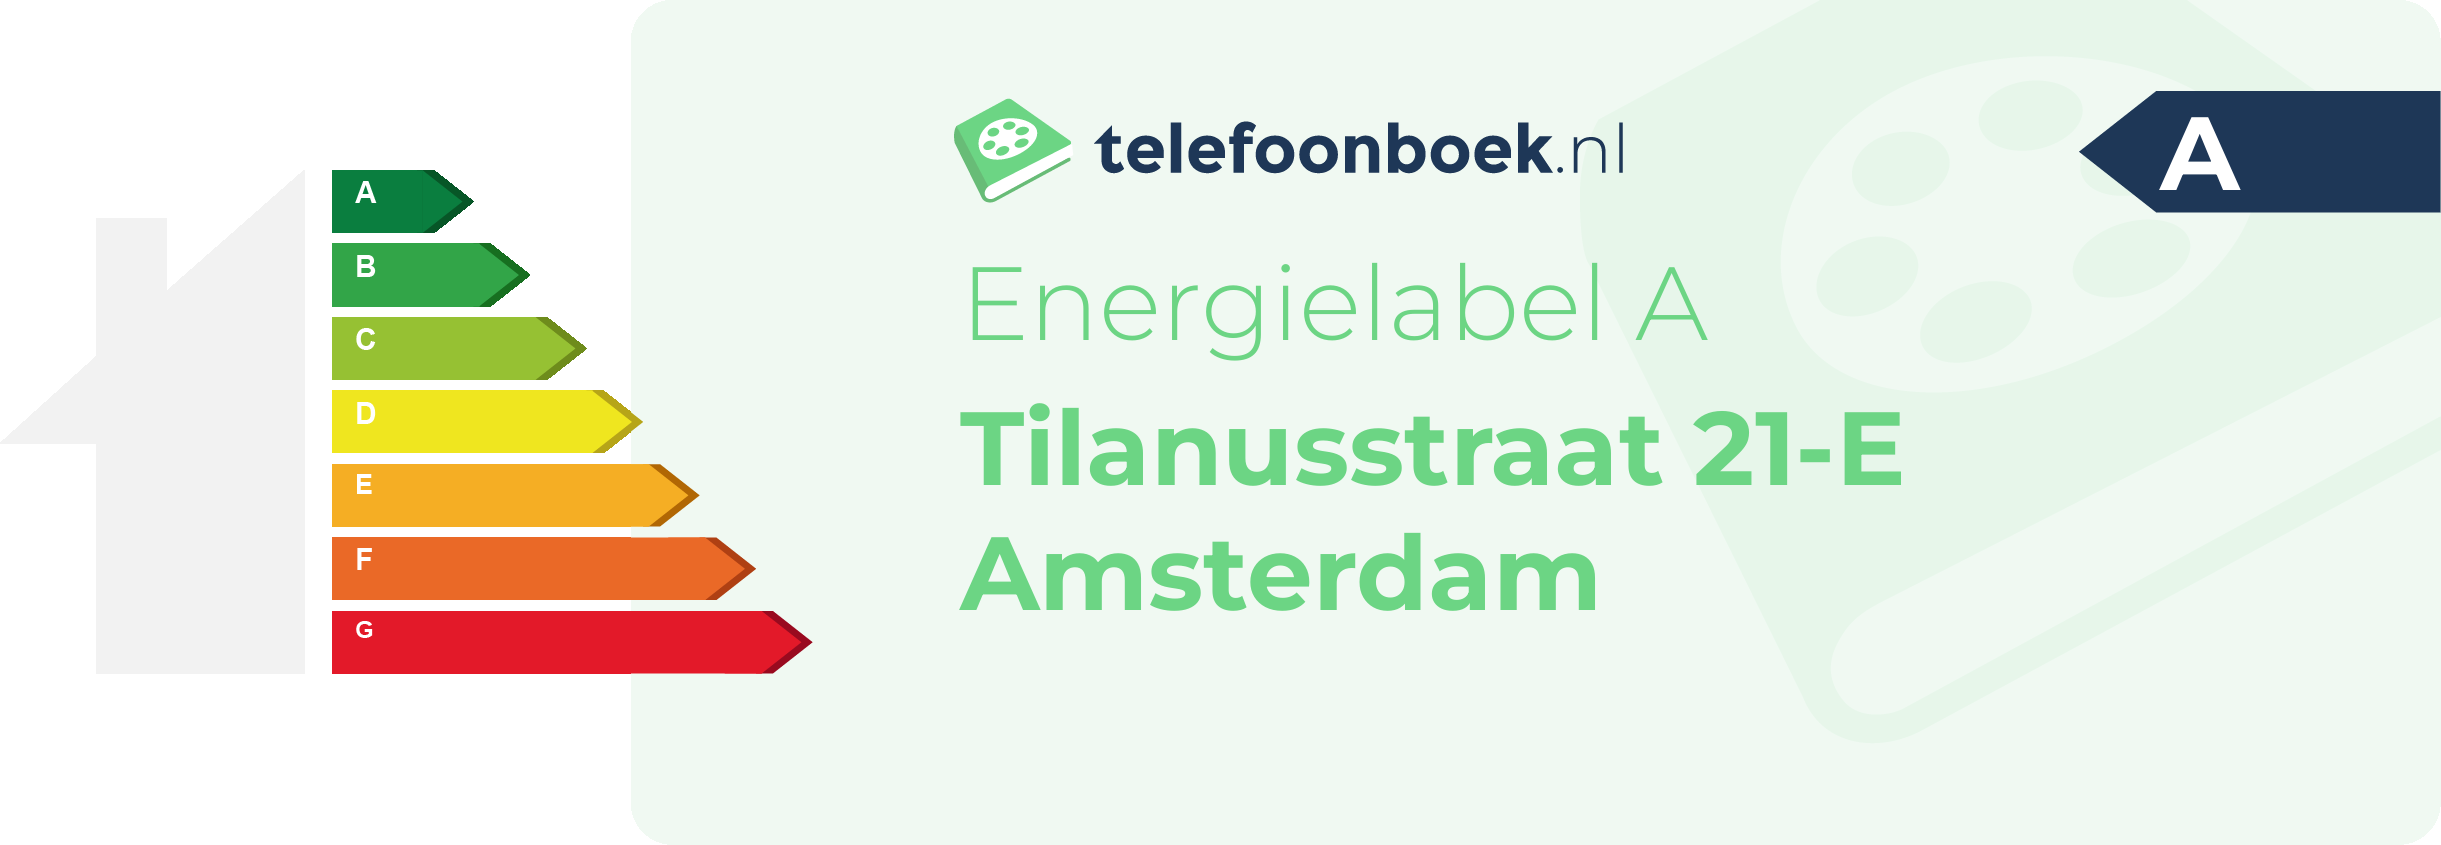 Energielabel Tilanusstraat 21-E Amsterdam